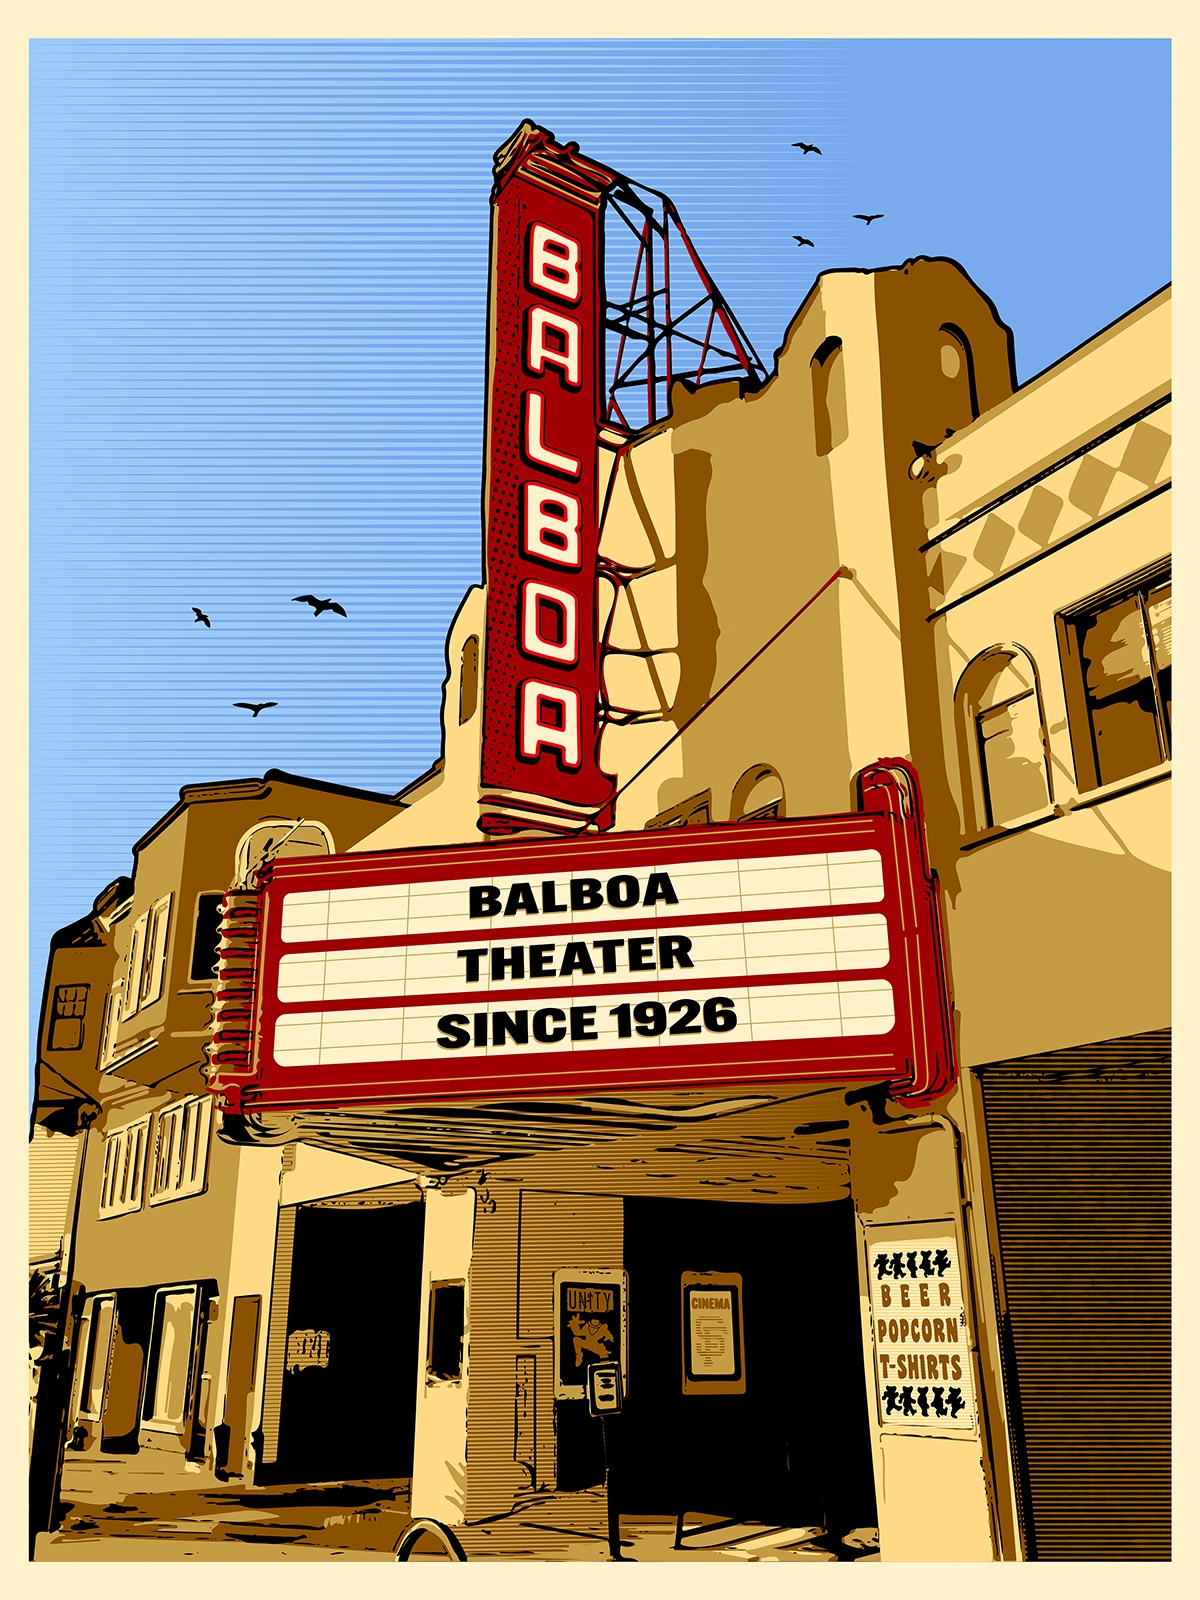 Balboa Theater illustration. San Francisco, California